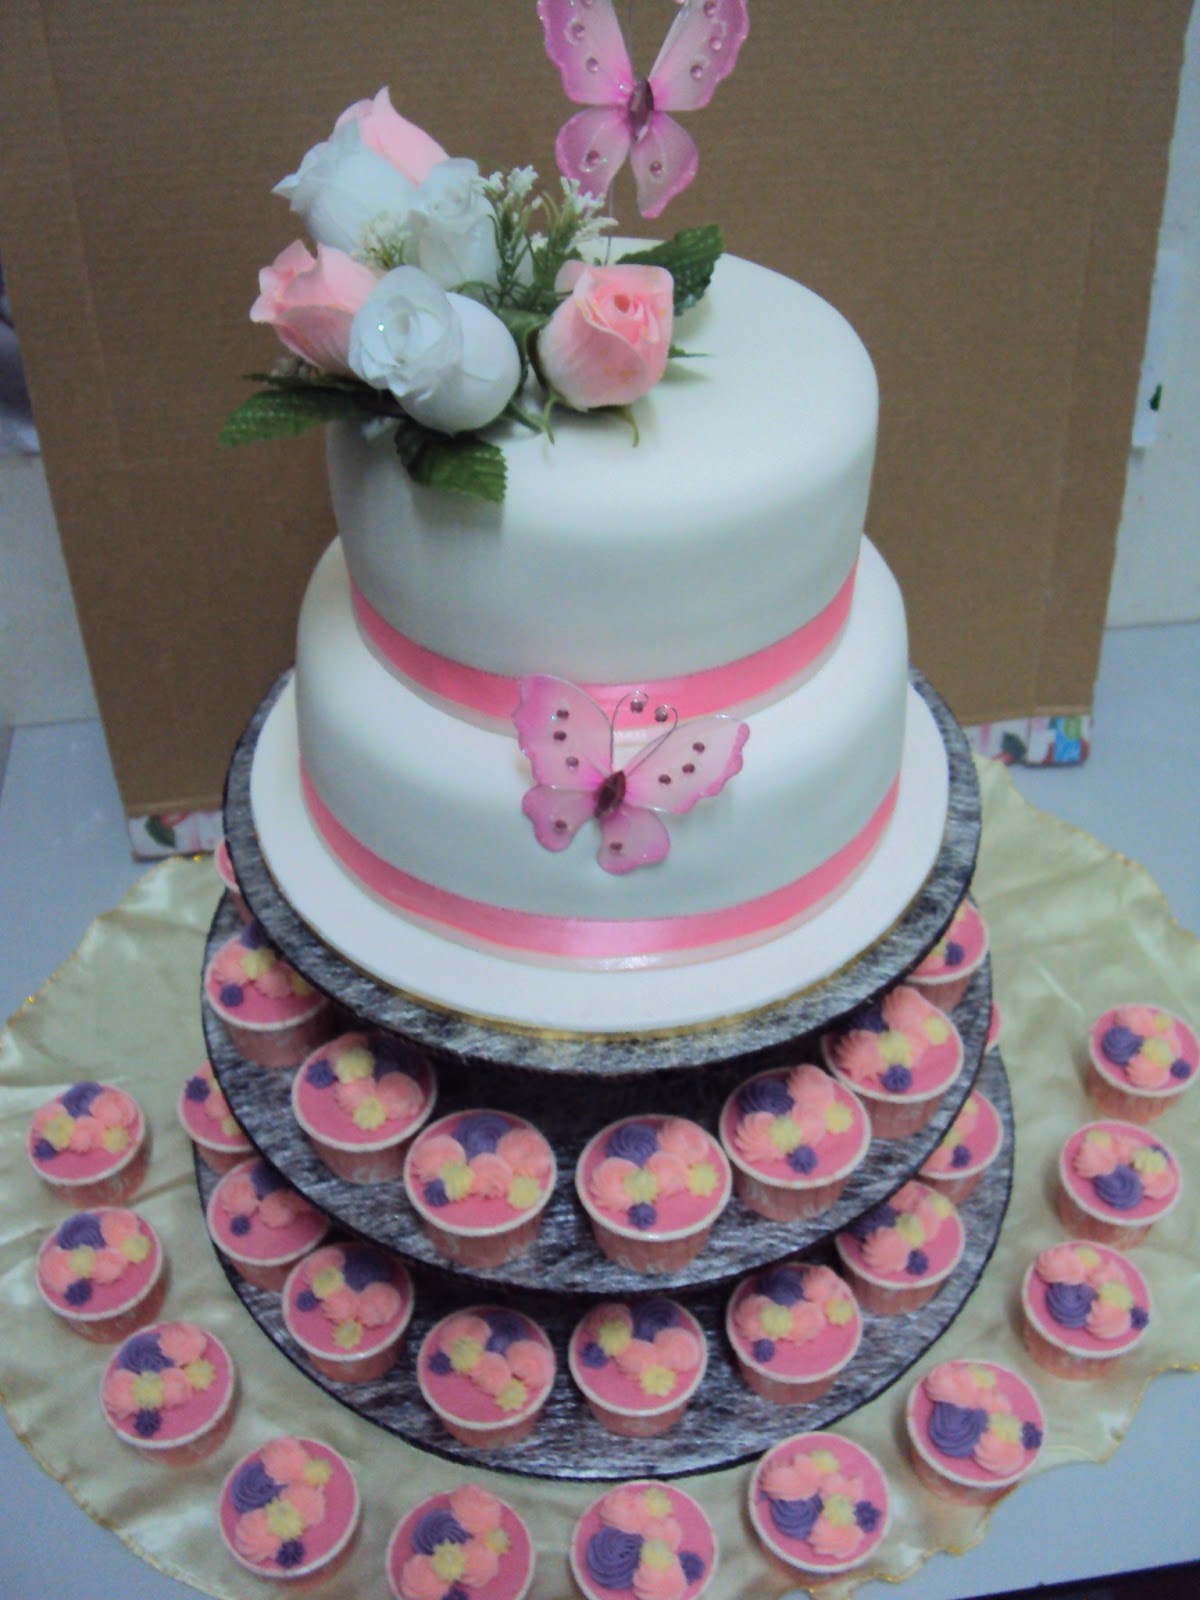  Cakes amp; Cupcakes Ipoh Contact : 0125991233 : 2 Tier Fondant Wedding